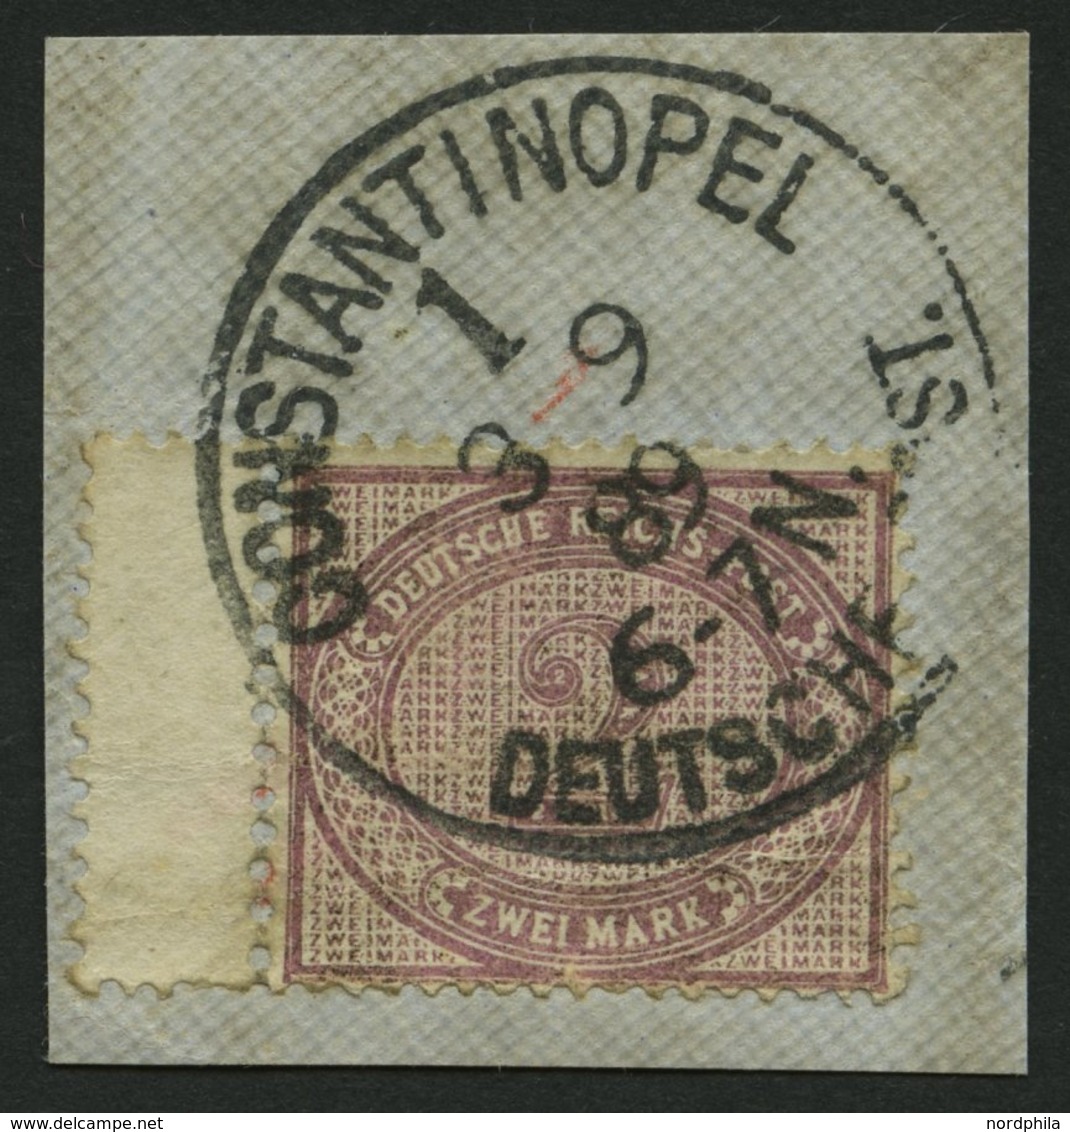 DP TÜRKEI V 37d BrfStk, 1889, 2 M. Lebhaftgraulila, Links Mit Anhängendem Steg, Stempel CONSTANTINOPEL 1, Prachtbriefstü - Turquia (oficinas)